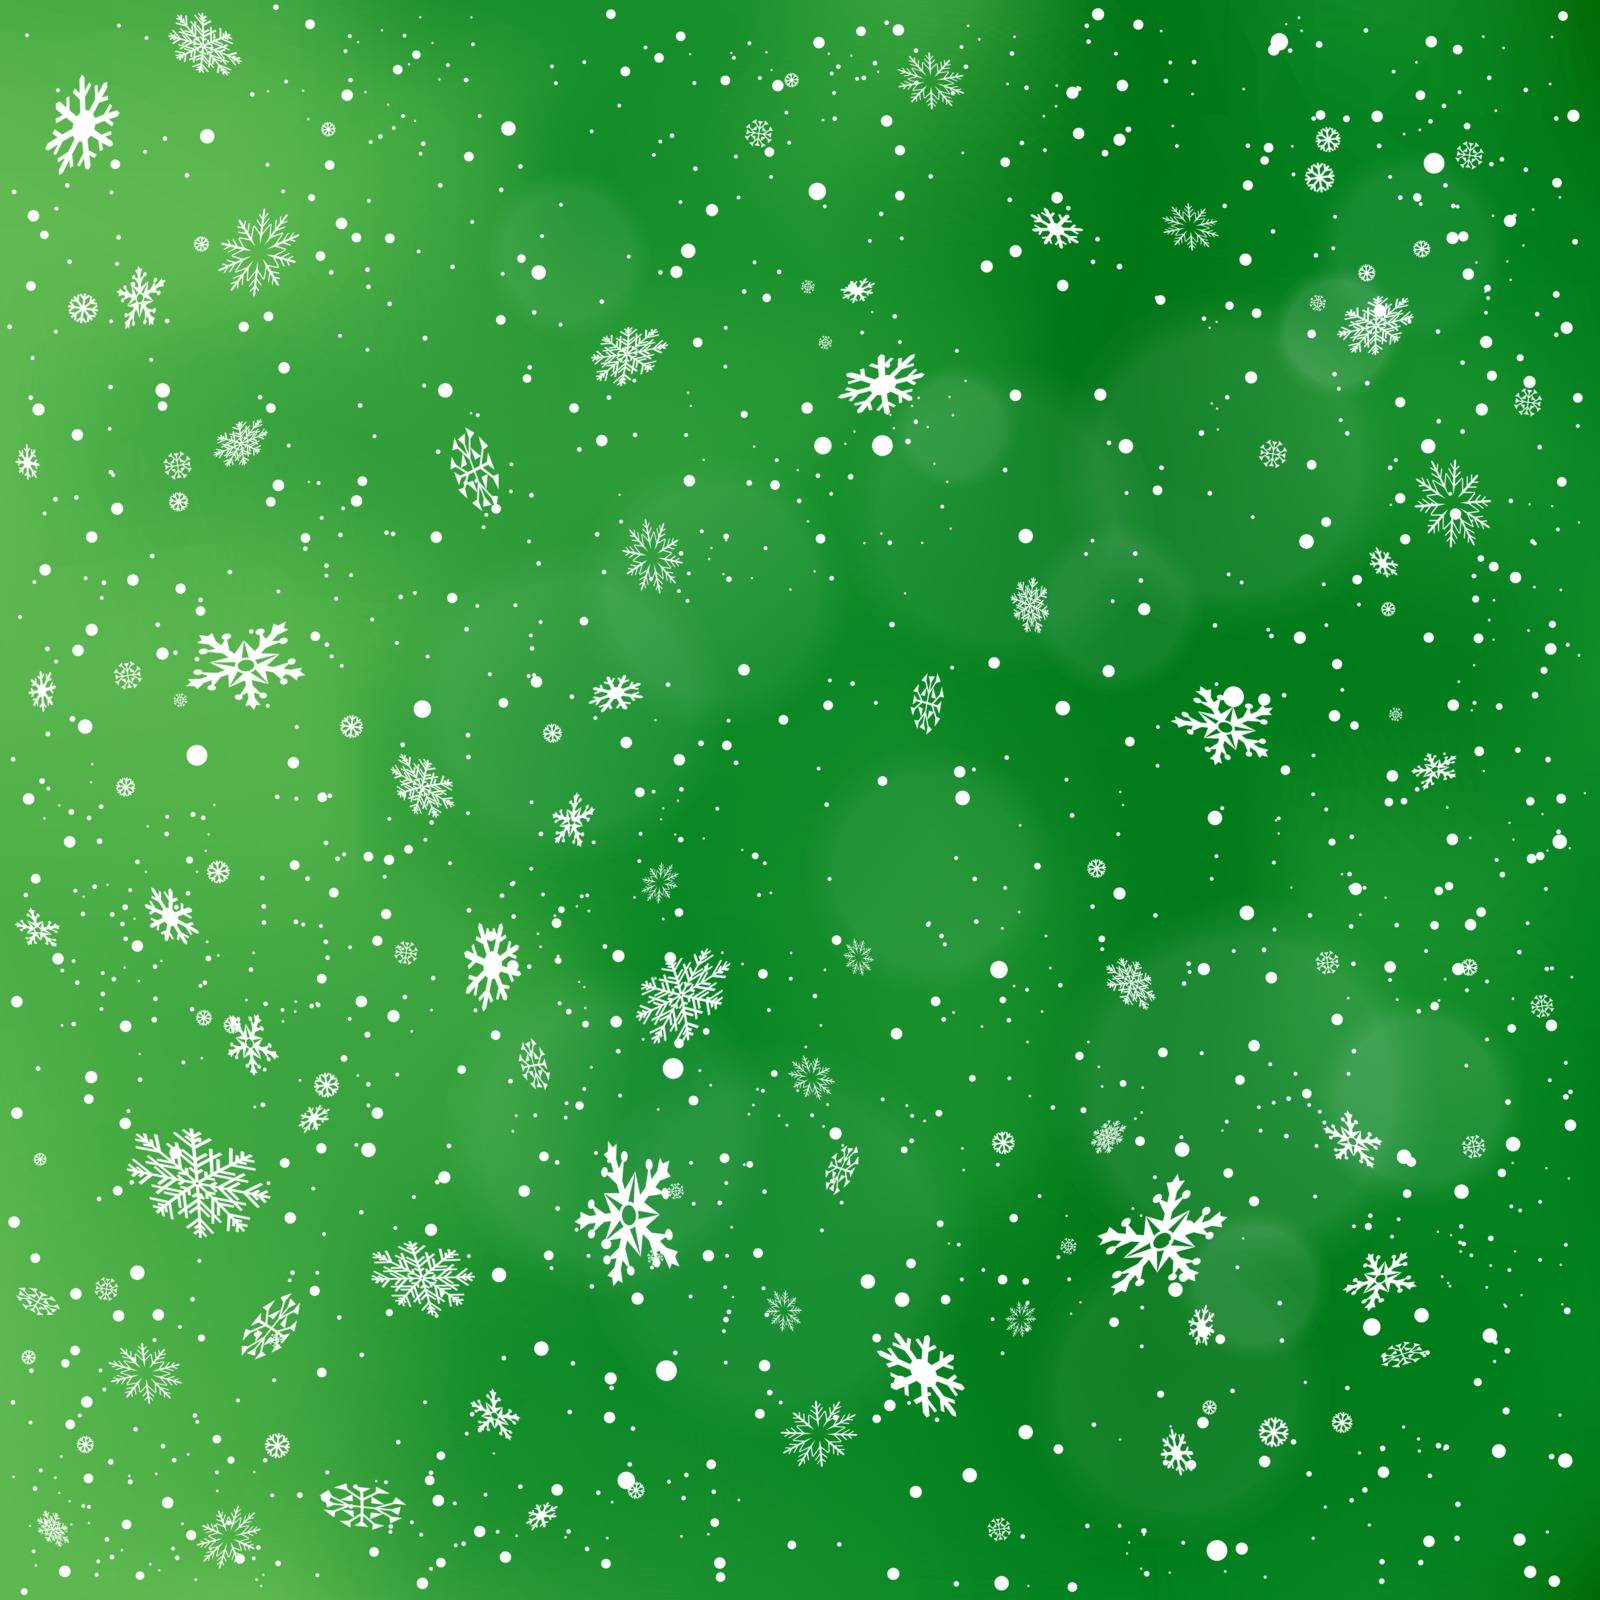 closeup snowfall on green backdrop by romvo